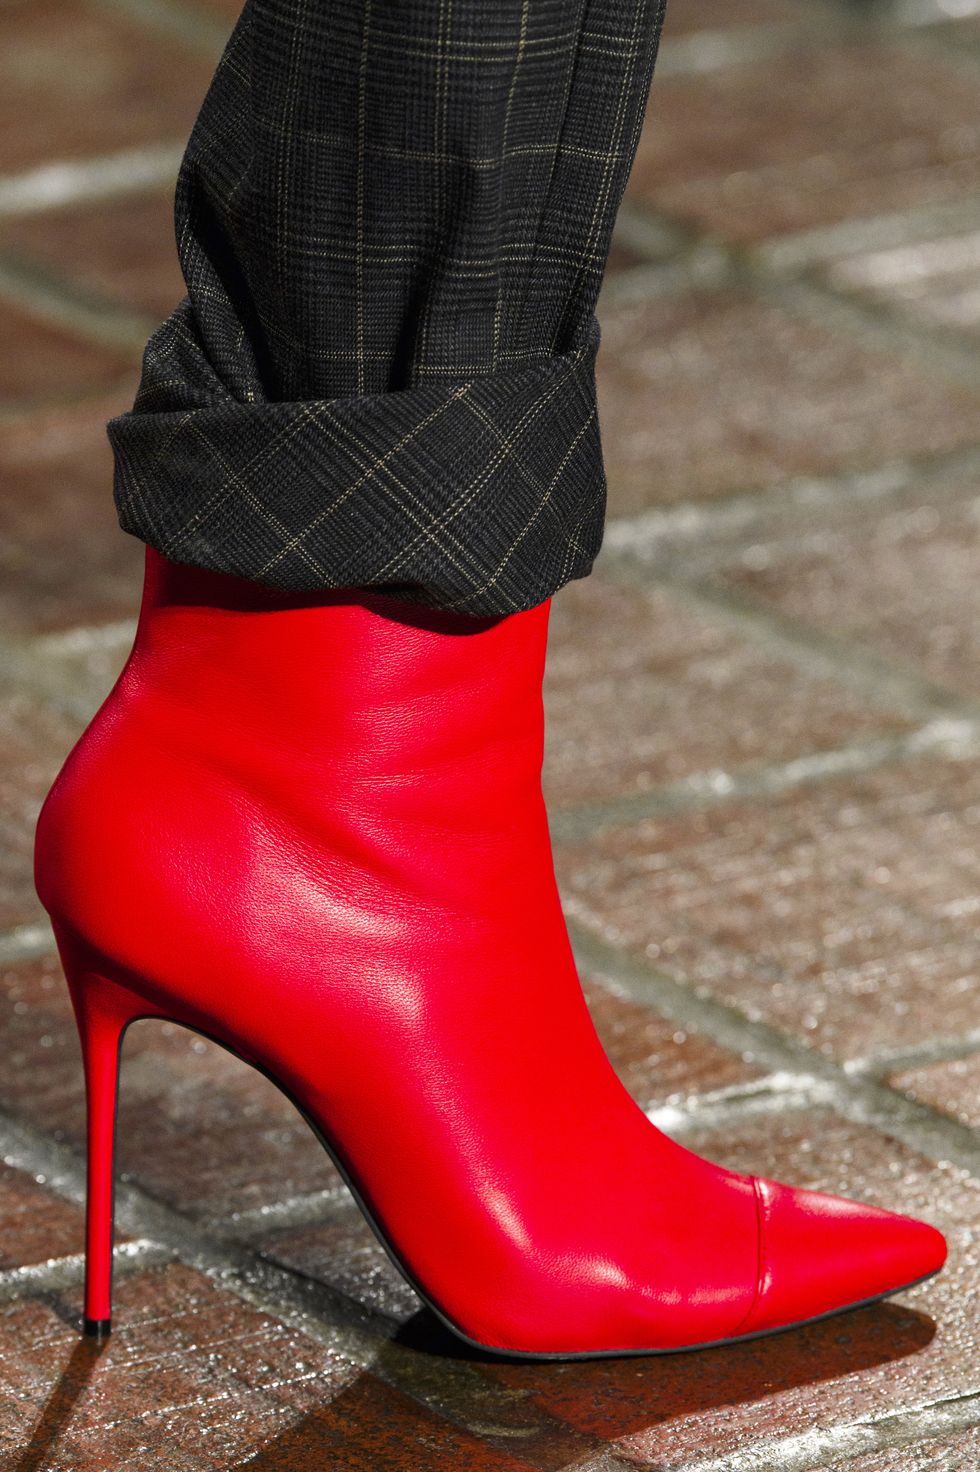 Footwear, High heels, Red, Boot, Shoe, Leg, Fashion, Street fashion, Ankle, Basic pump, 